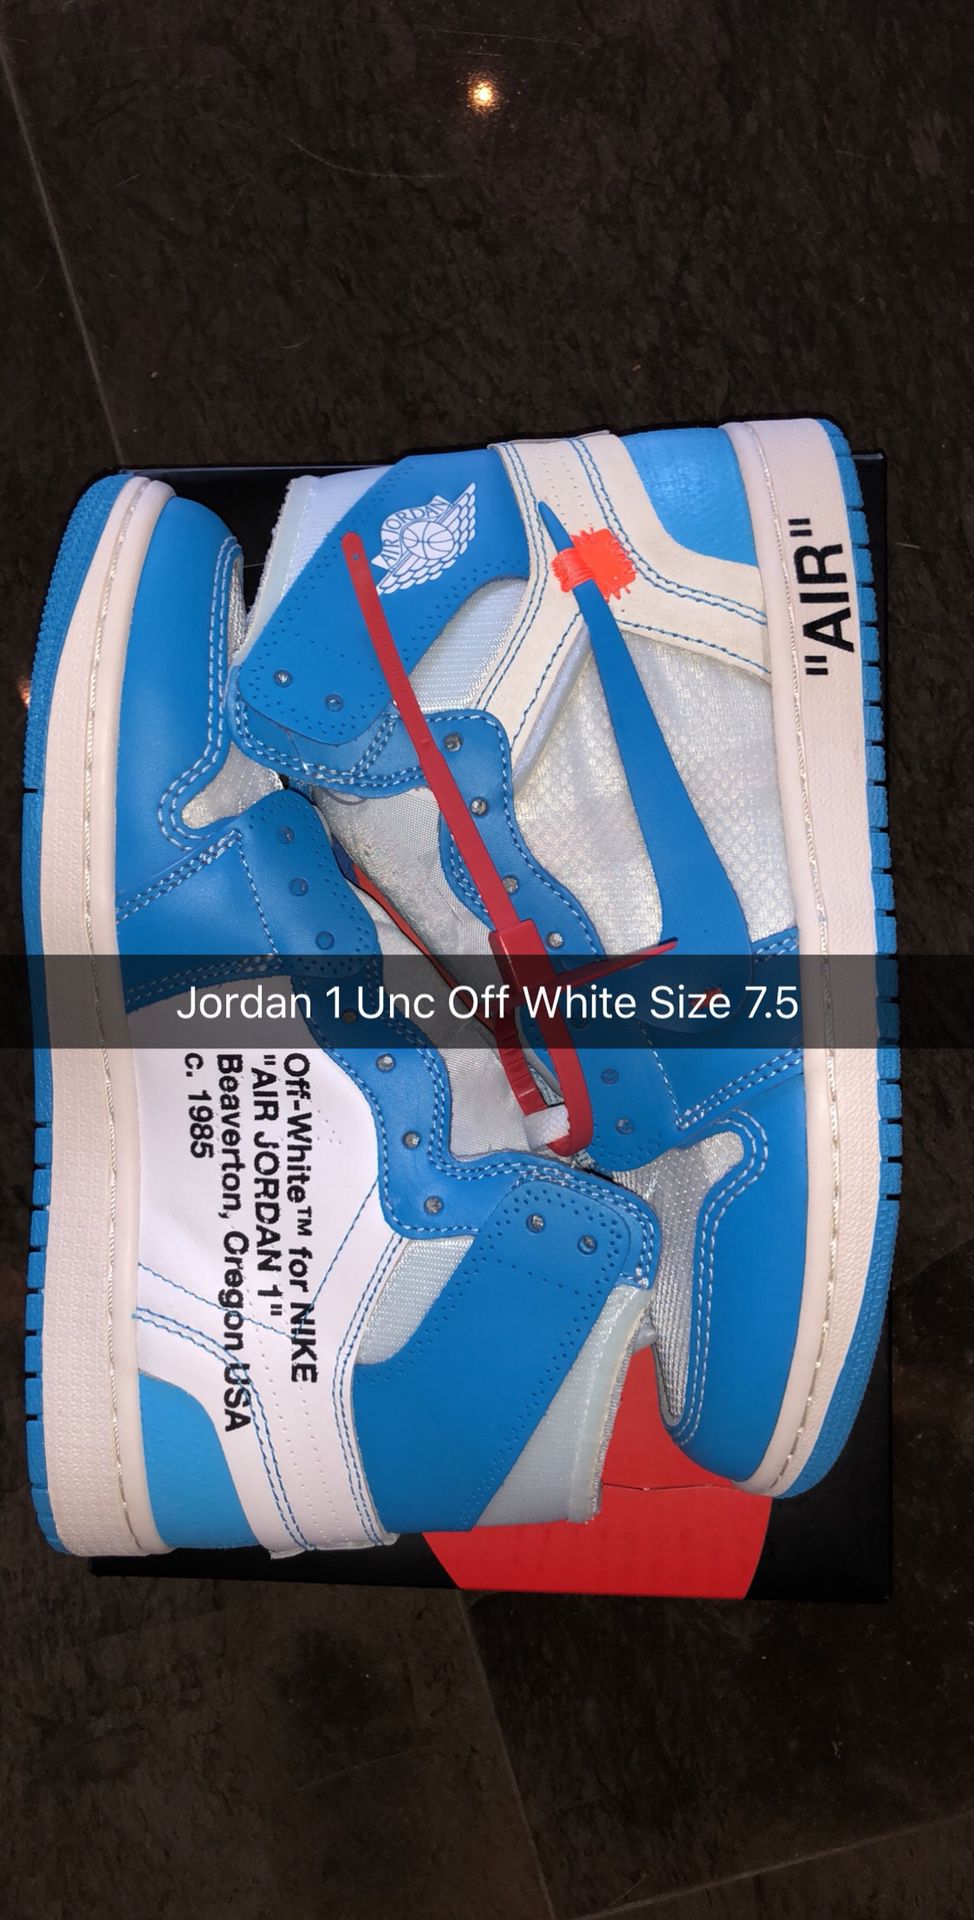 Jordan 1 Off white Unc size 7.5 New